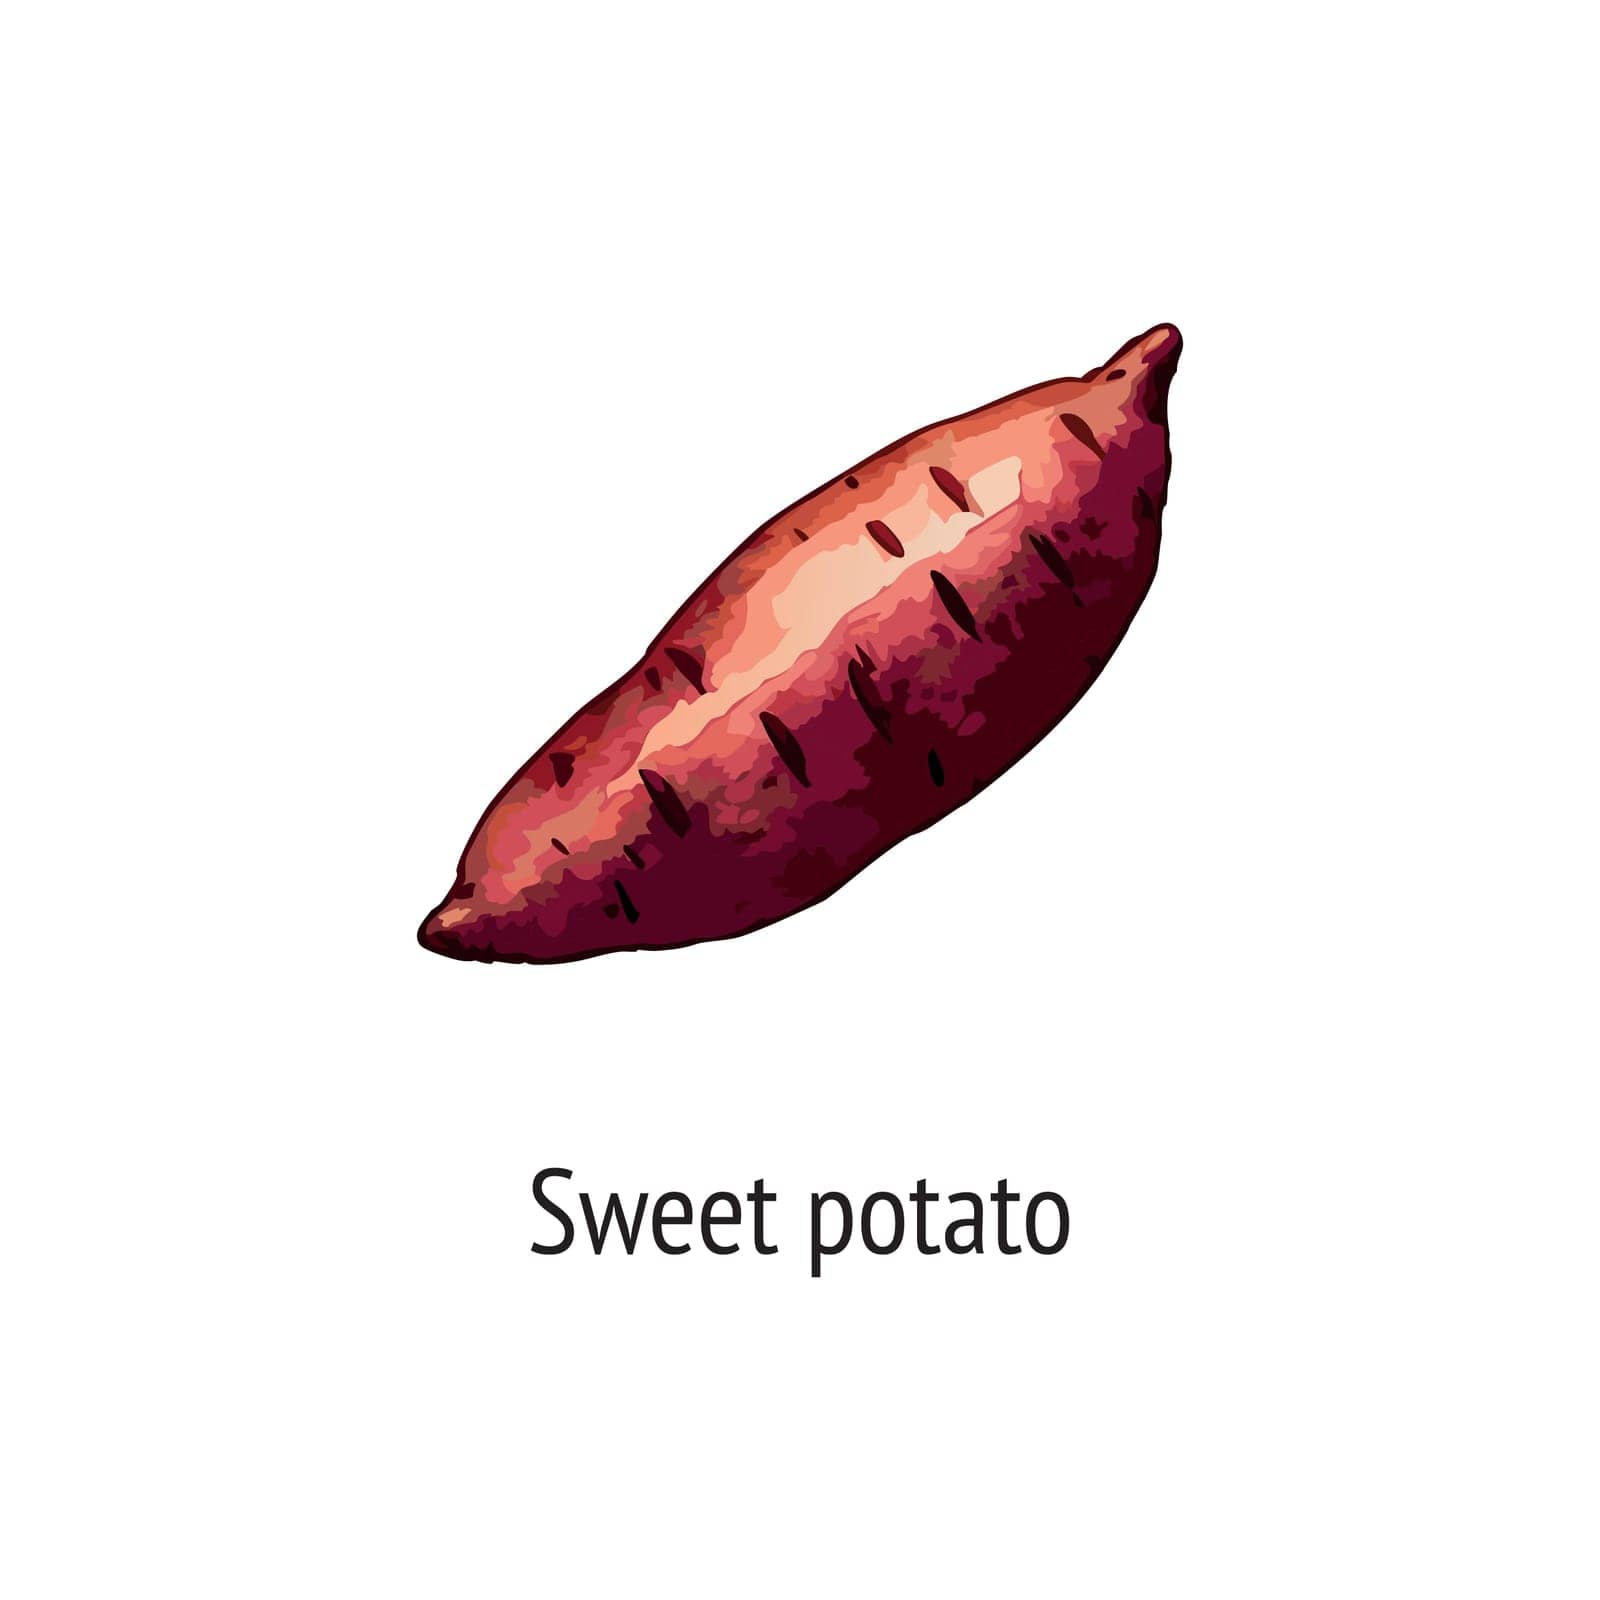 Sweet potato vector illustration by alyalya